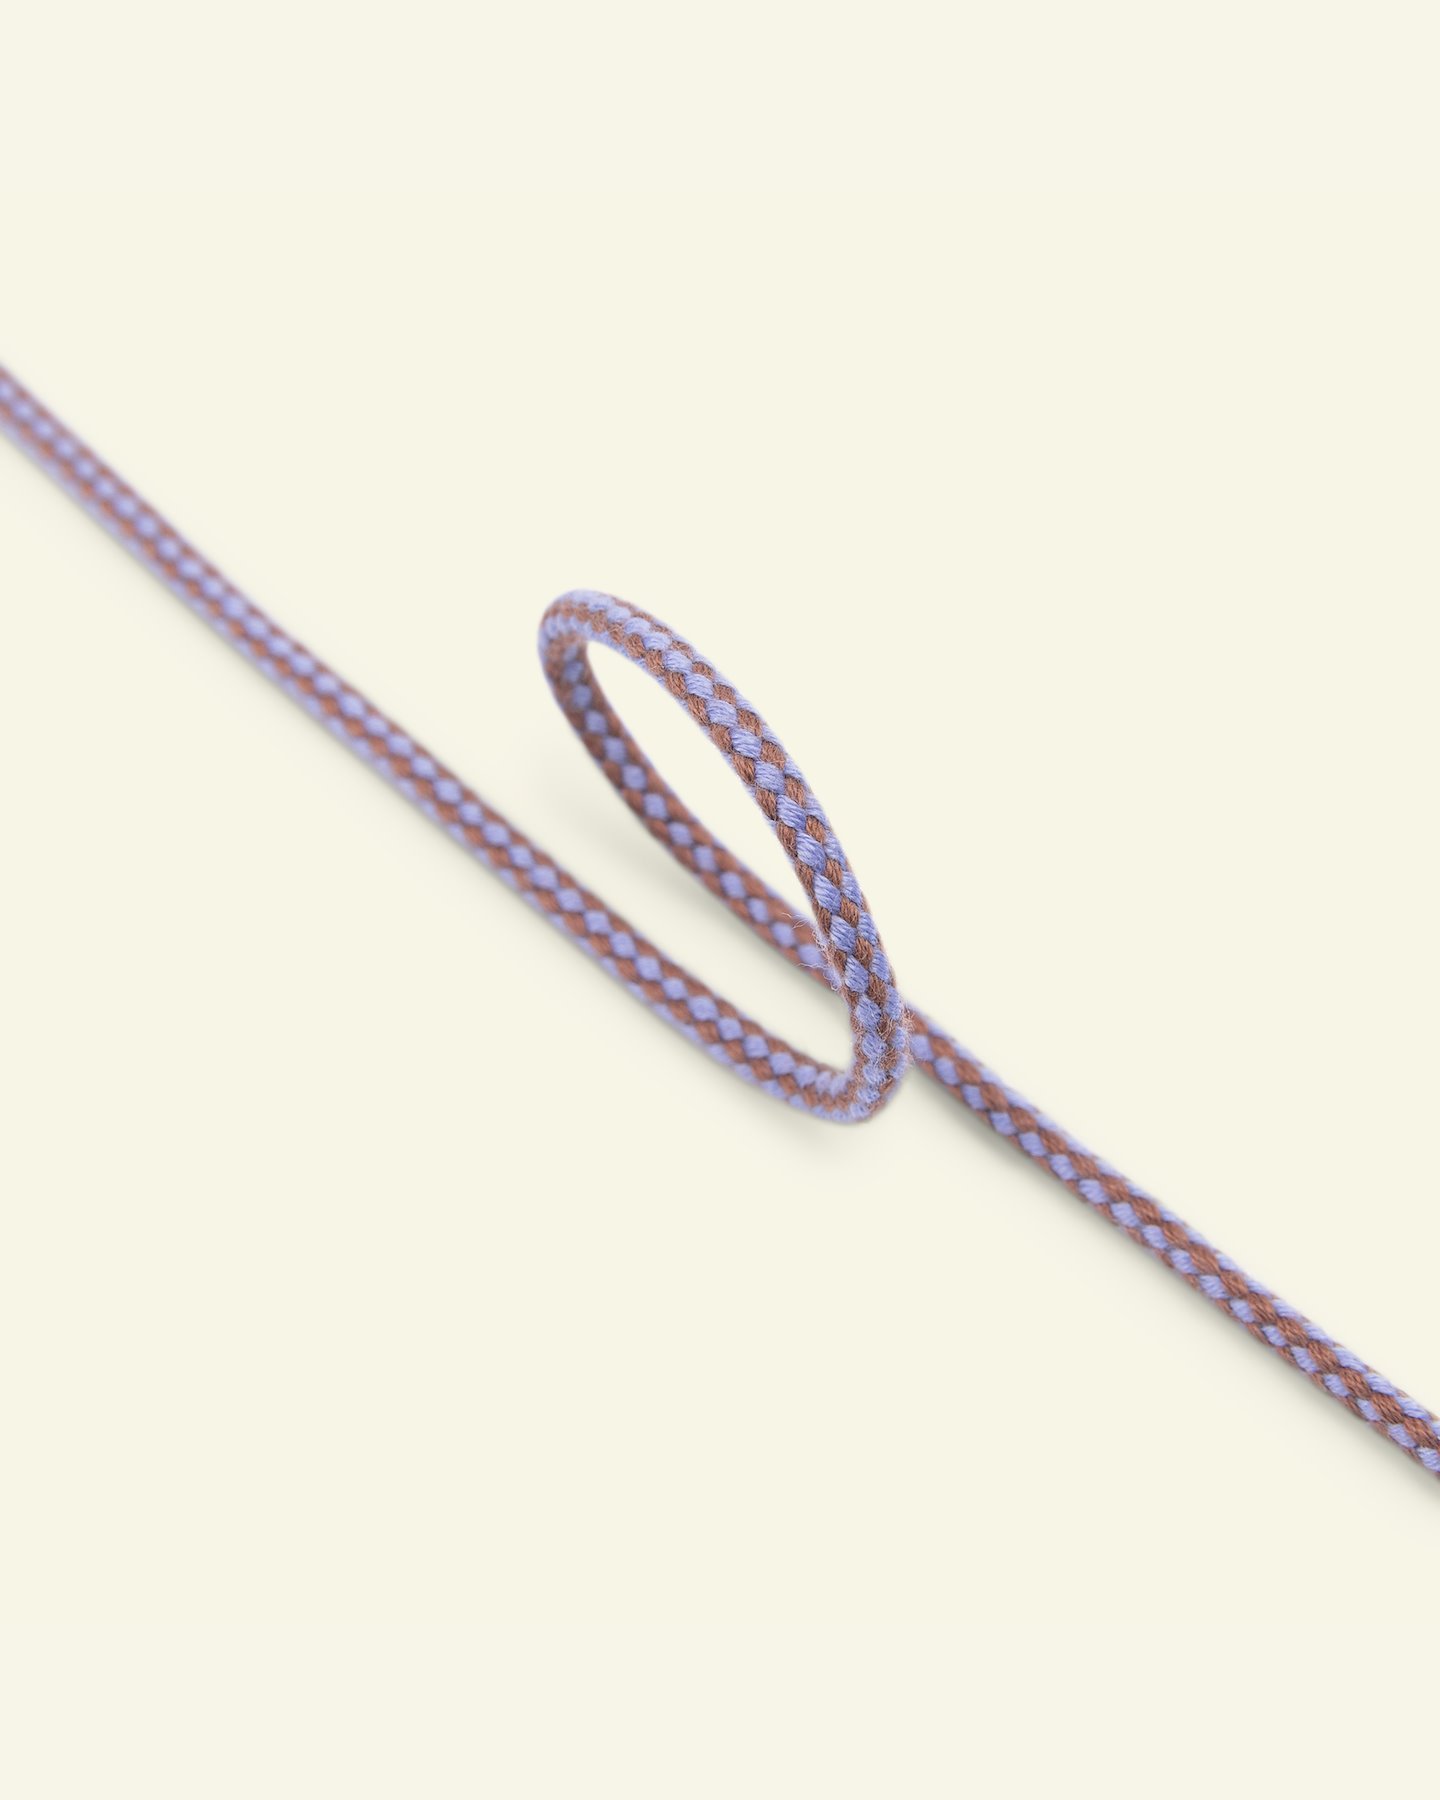 Anorak cord 3,5mm terra./purple 100m 75106_pack.png